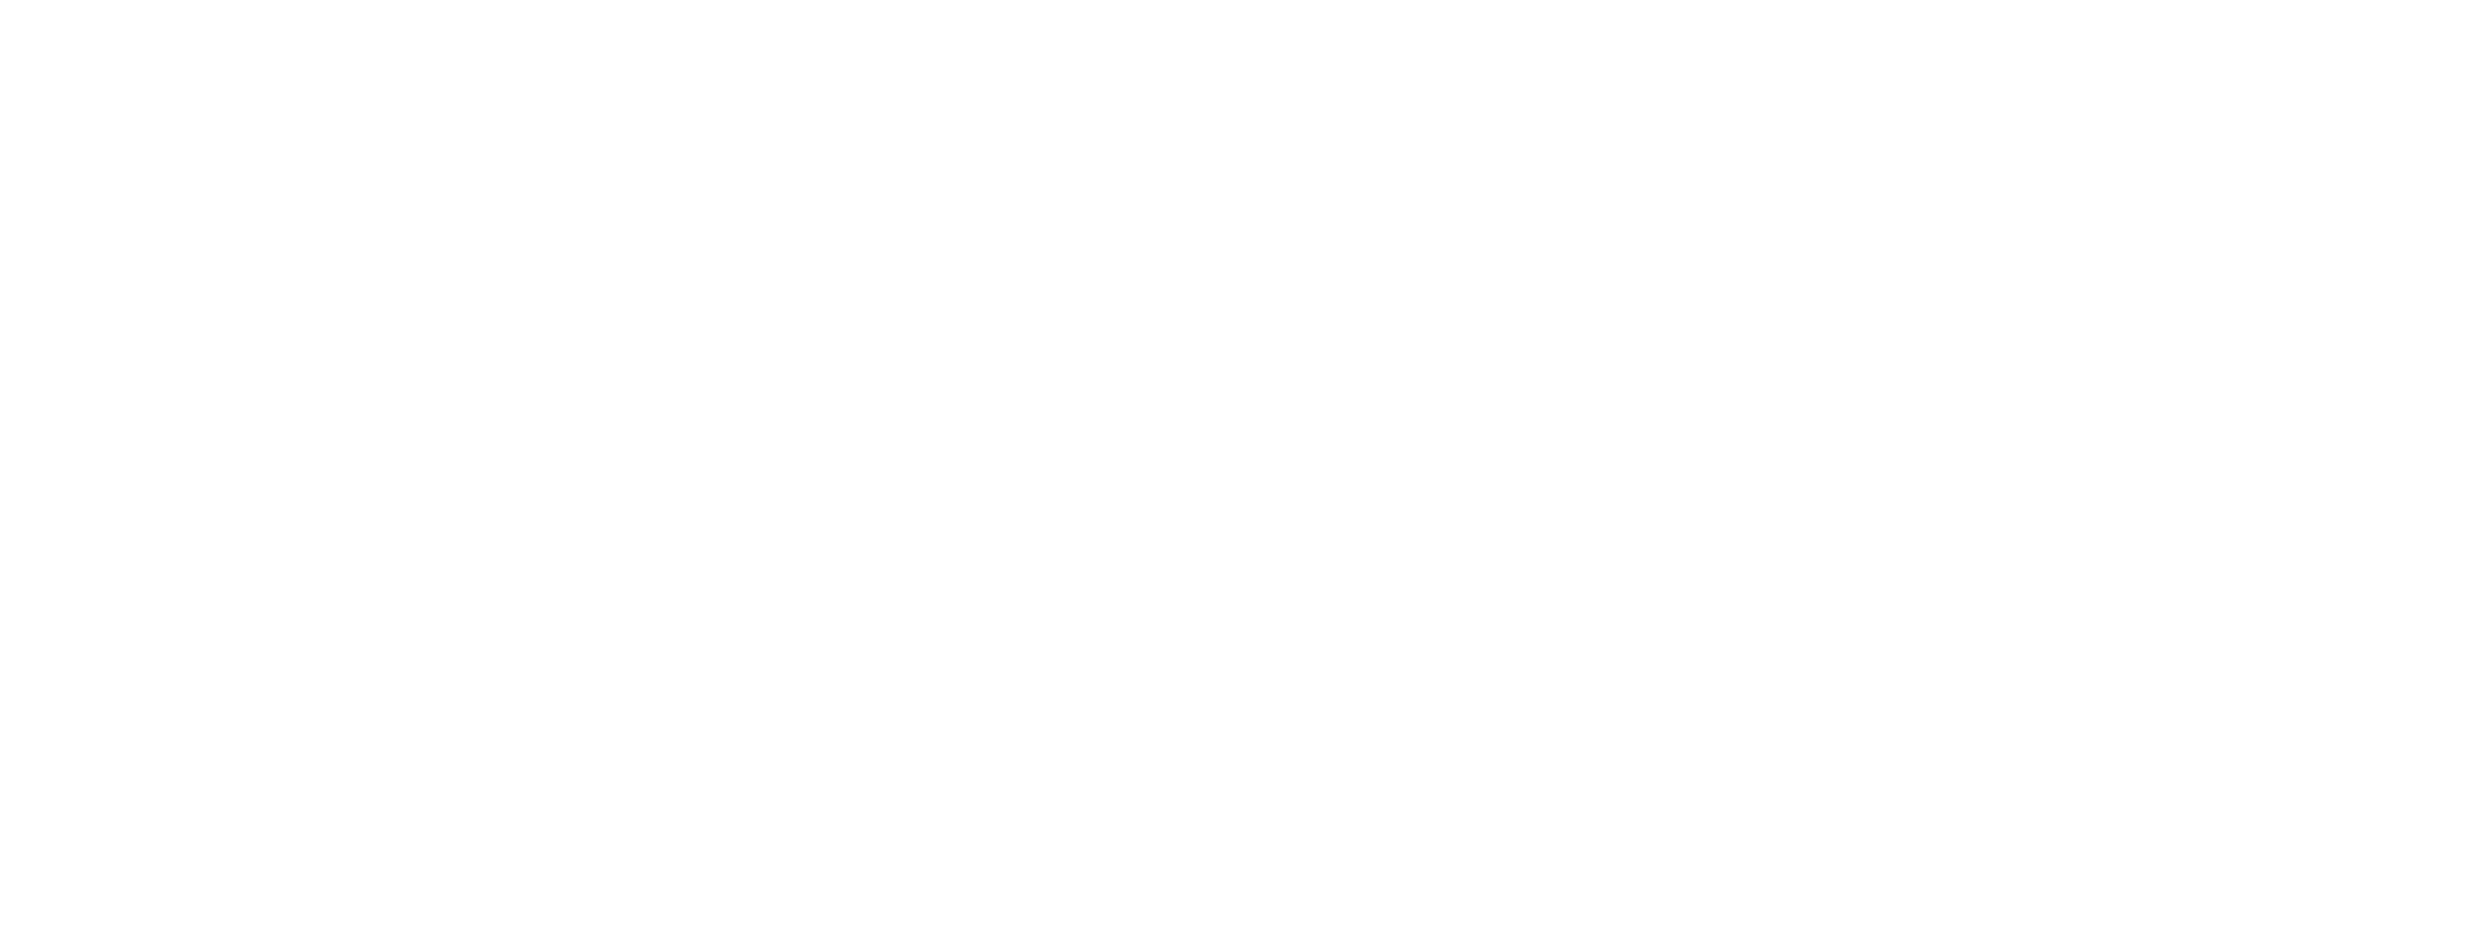 ampidrelum-extended-white